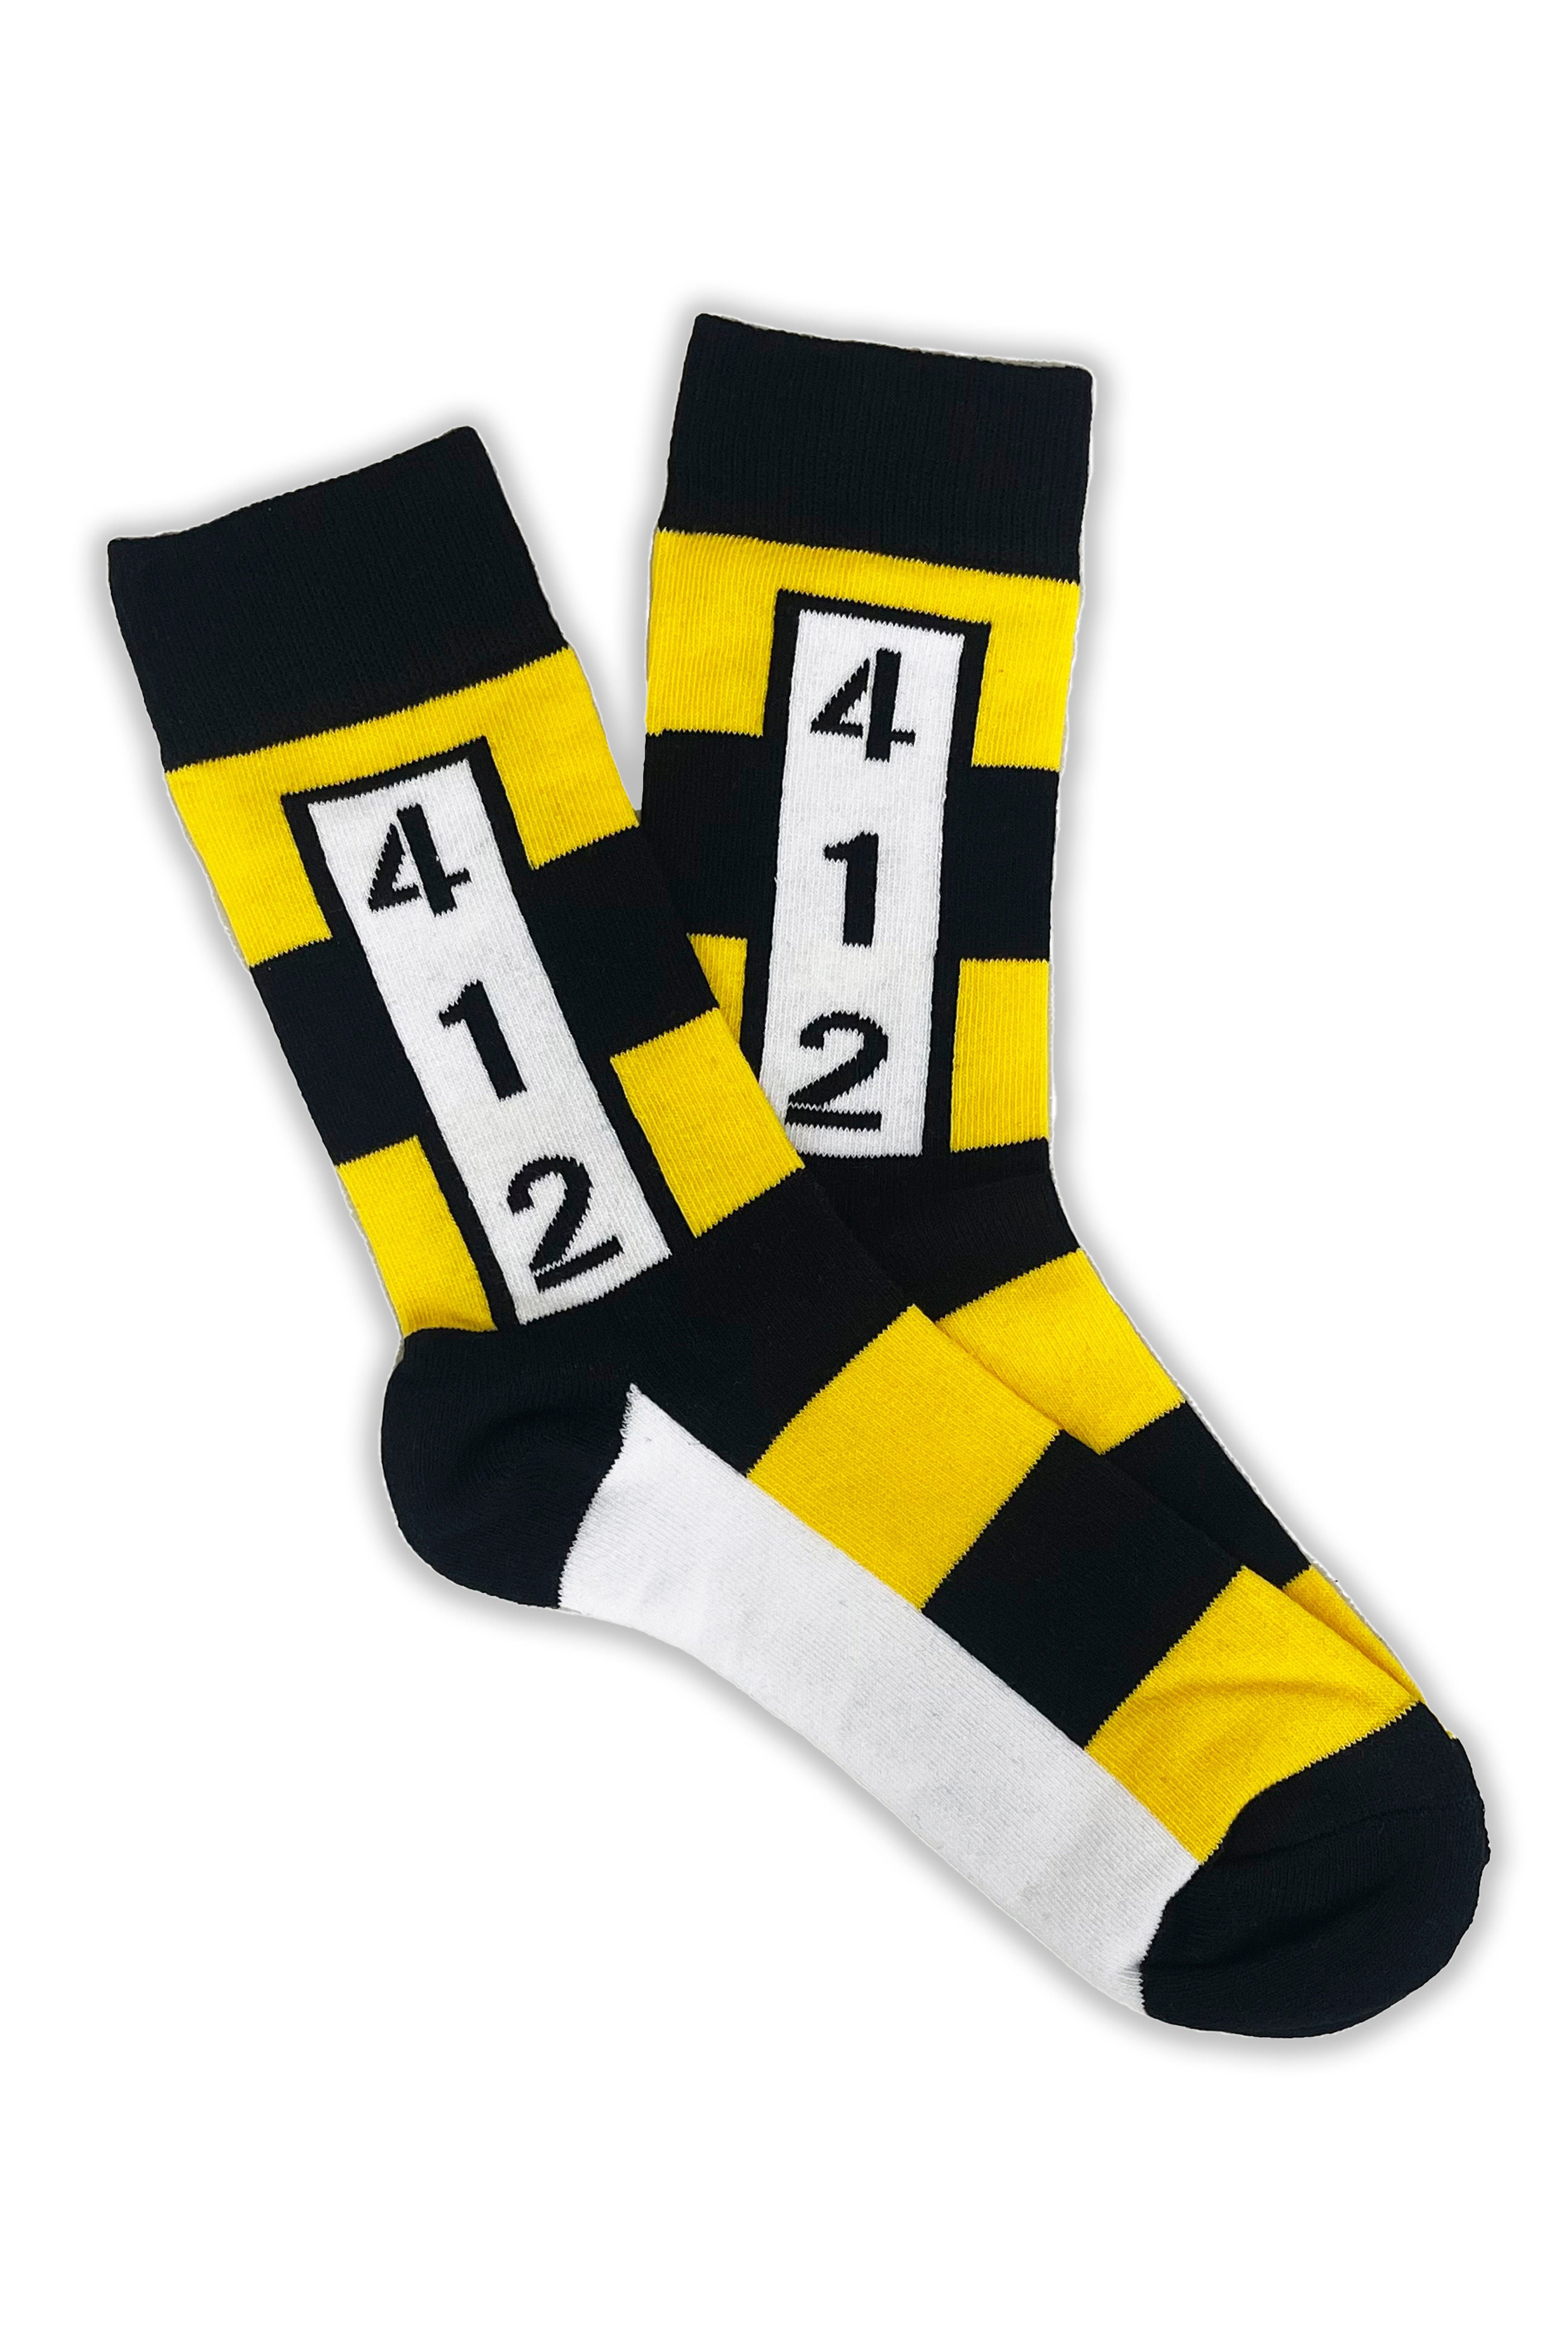 7109 -Pittsburgh 412 Socks